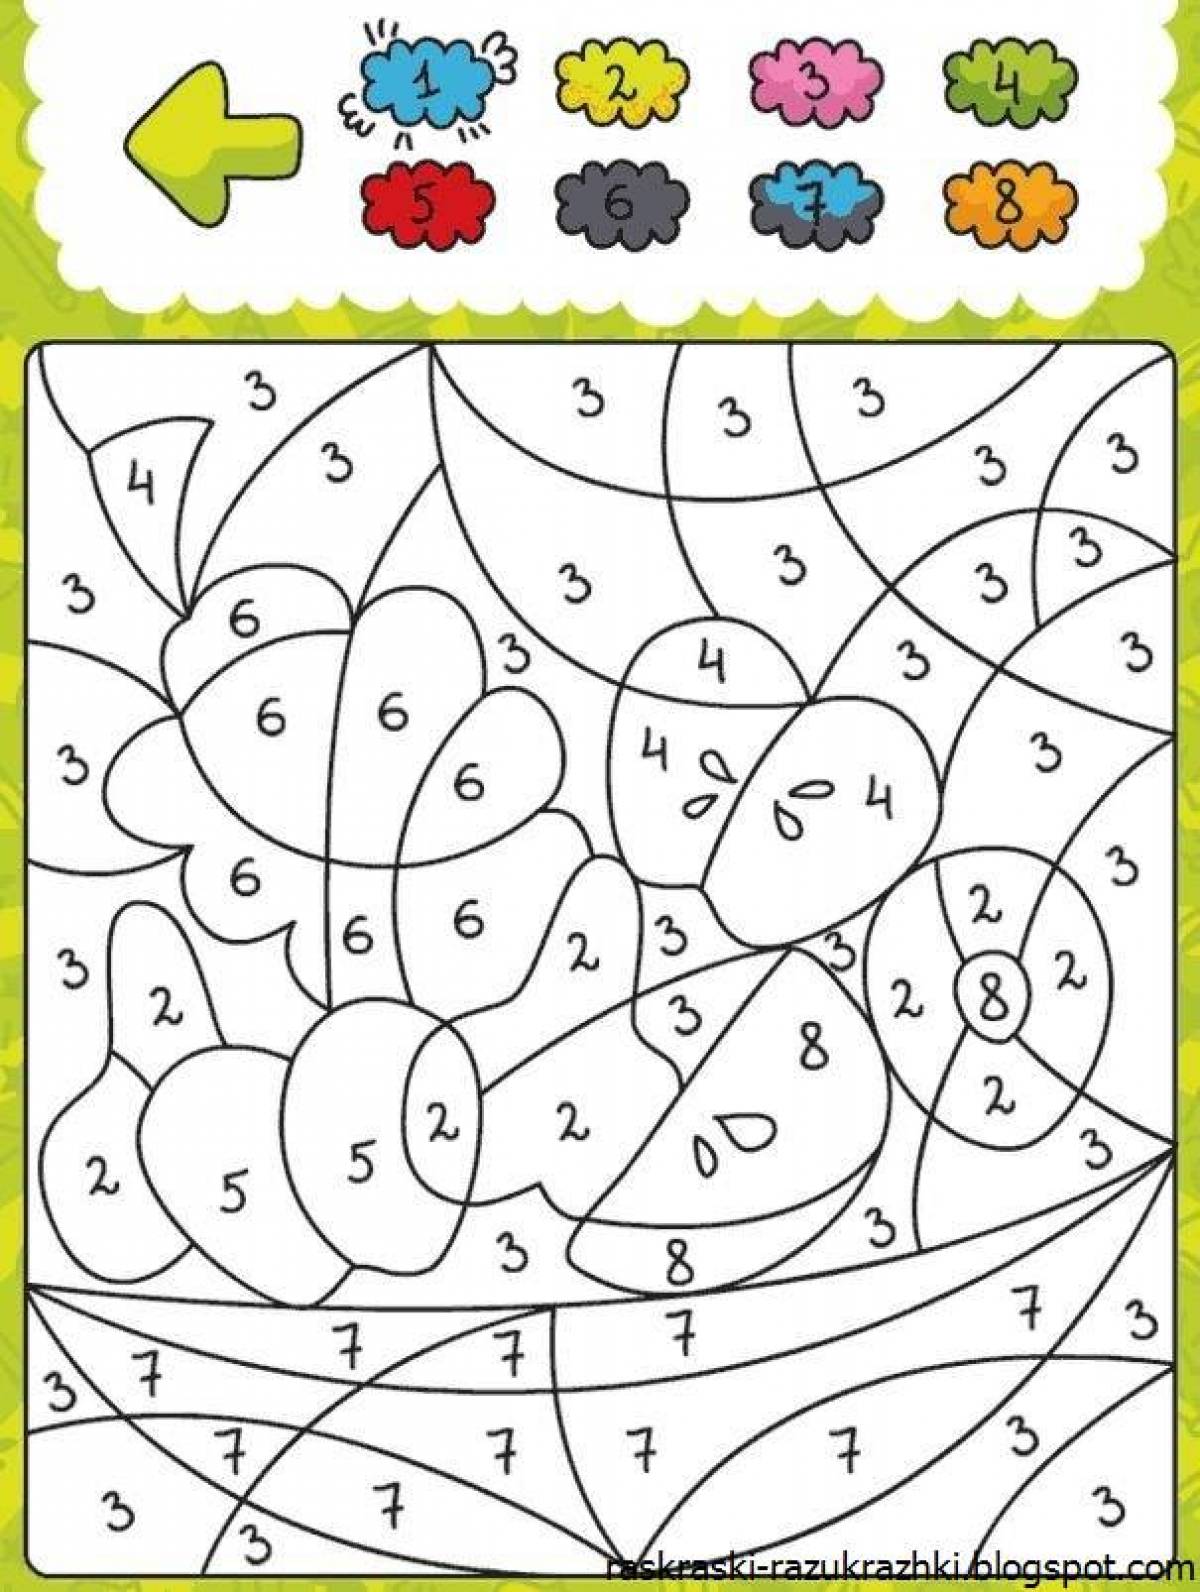 Joyful coloring book for preschoolers 6-7 years old